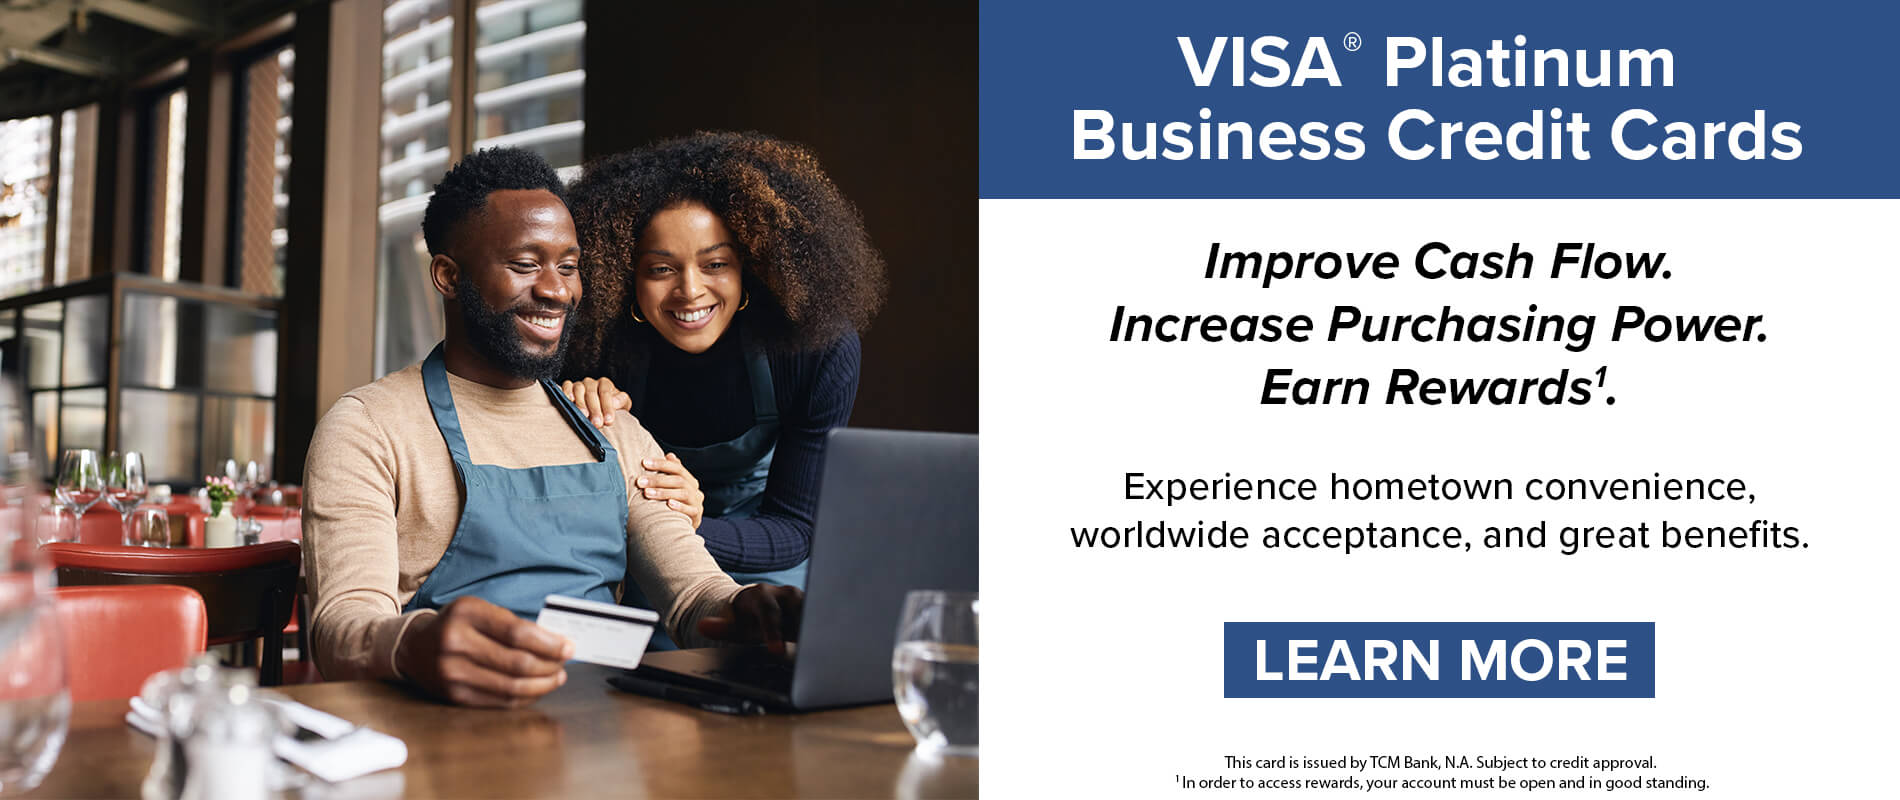 Visa Business Credit Cards